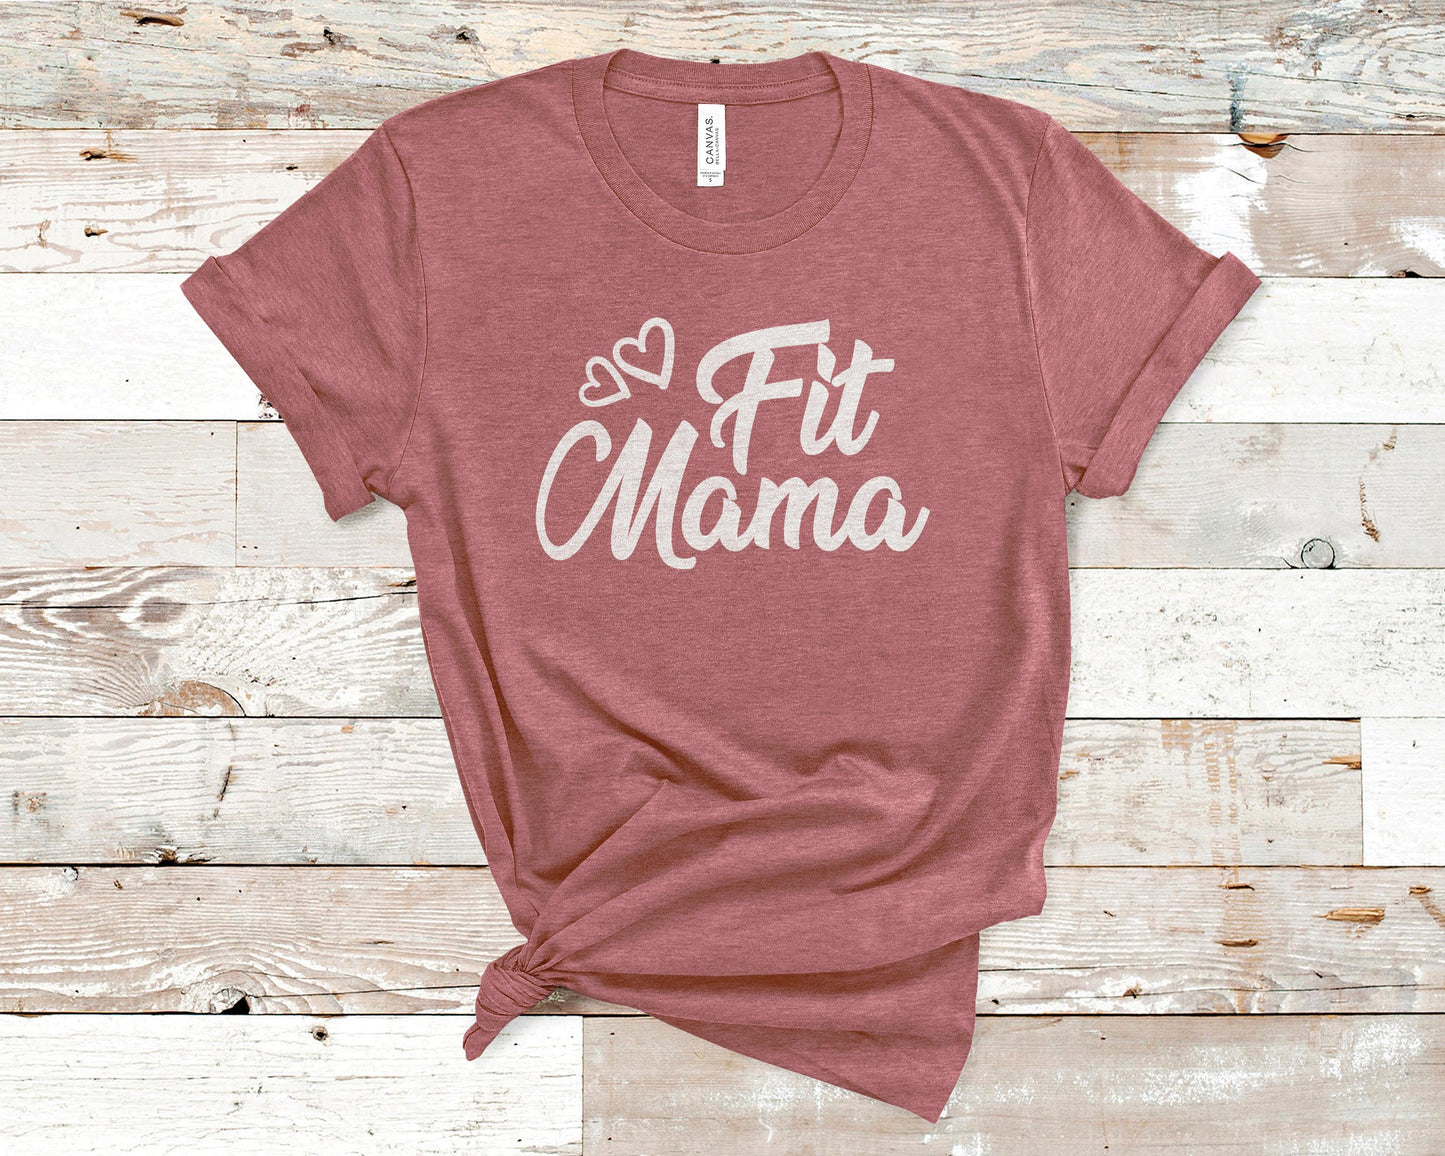 Fit Mama - Fitness Shirt